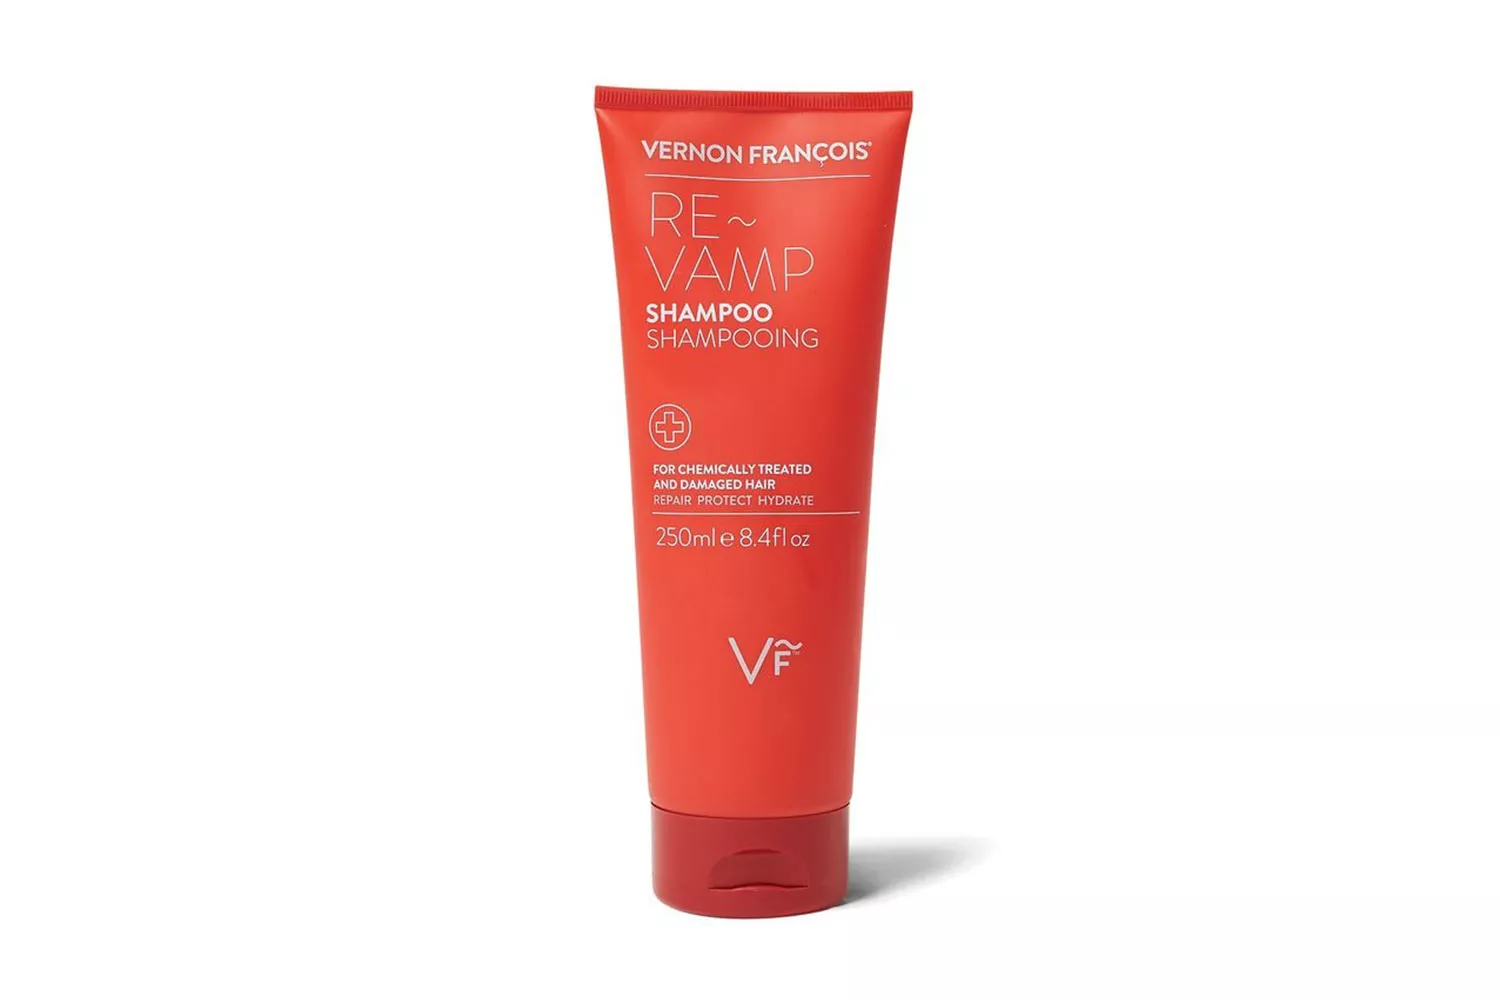 Vernon Francois Re-Vamp Shampoo